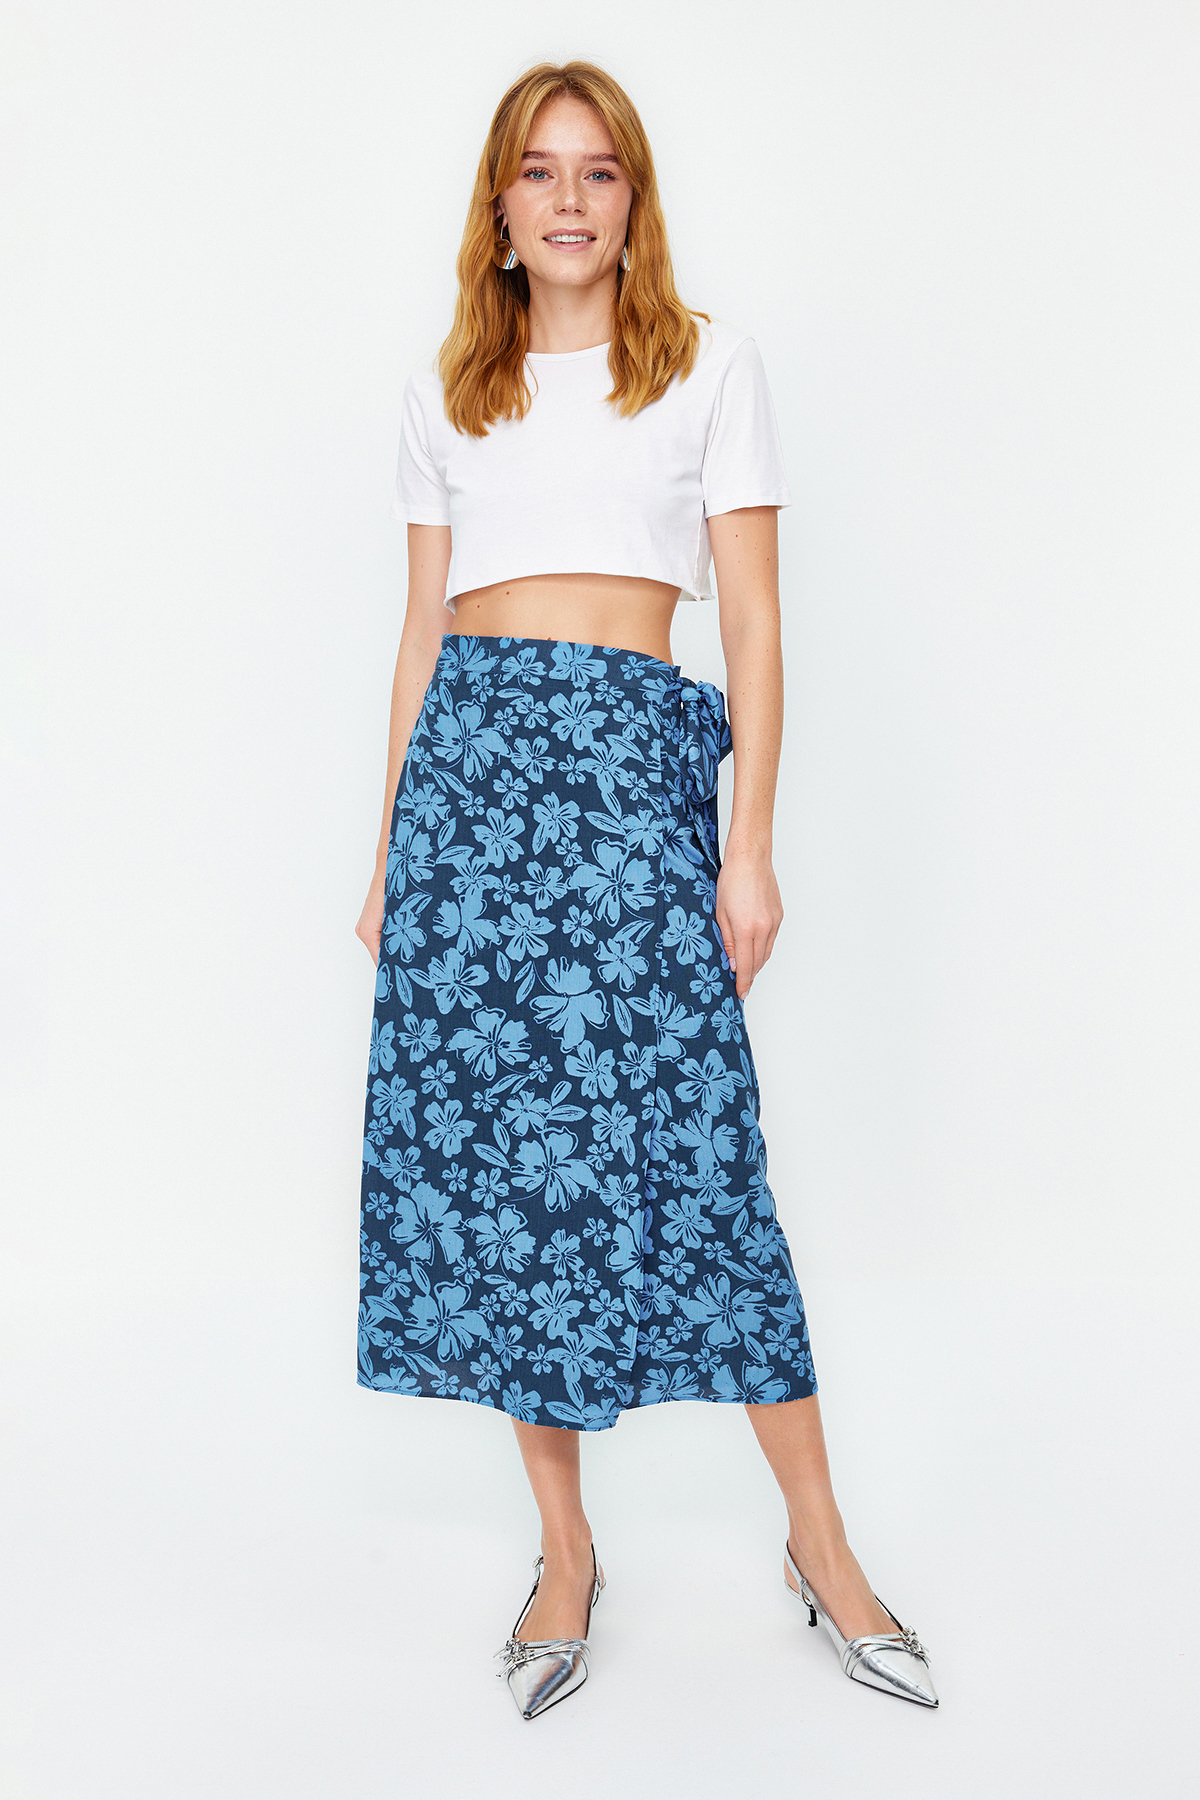 Trendyol Blue Floral Pattern Woven Skirt